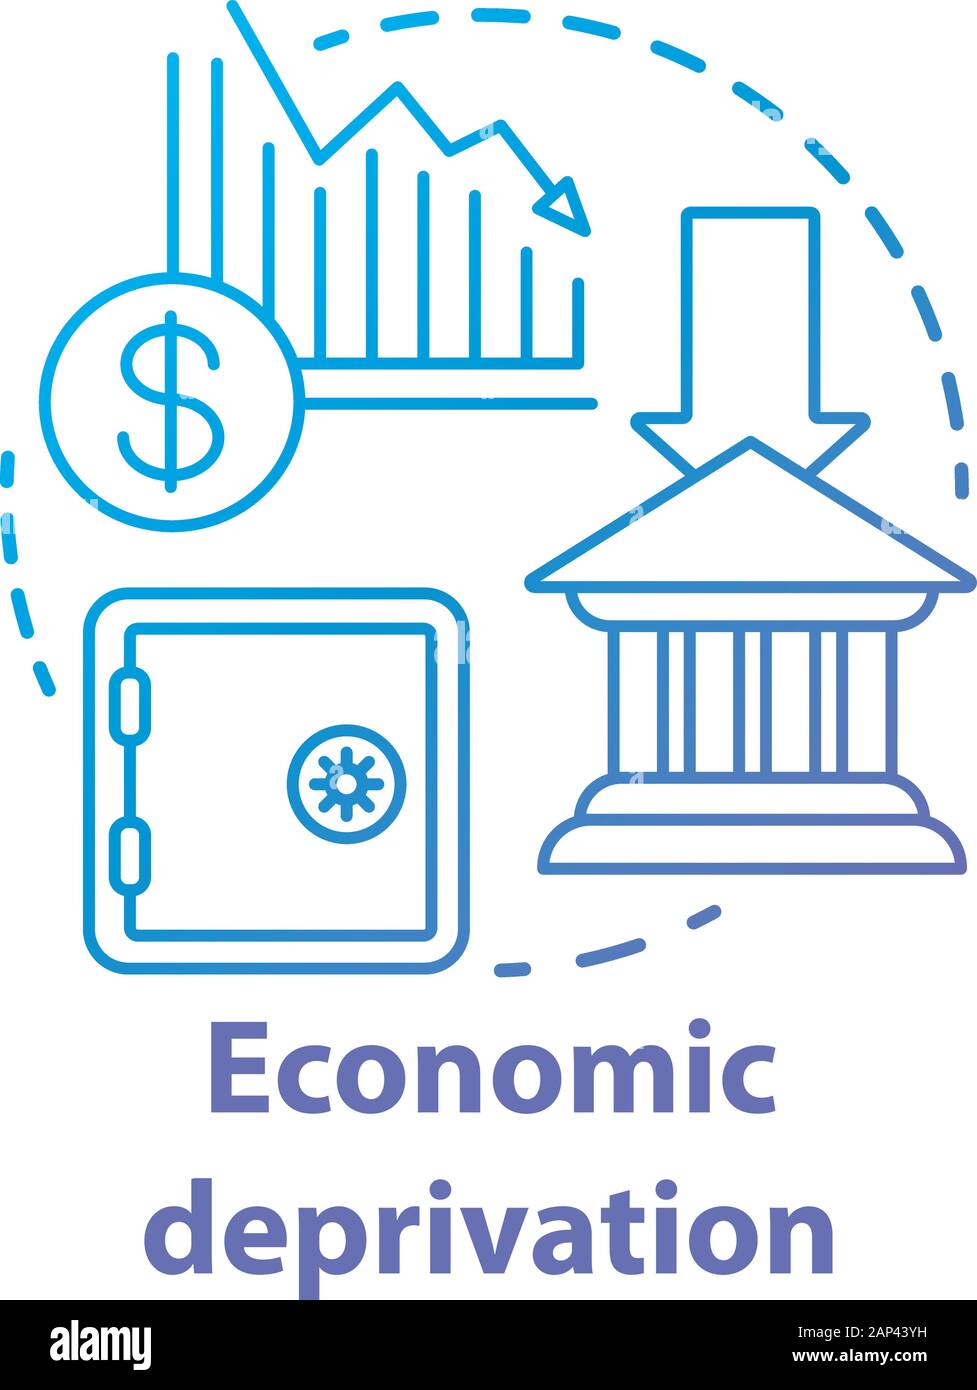 Economic deprivation concept icon. Poverty & financial loss, money lack. Thin line illustration. Financial crisis. Stock market crash, decline. Bankru Stock Vector